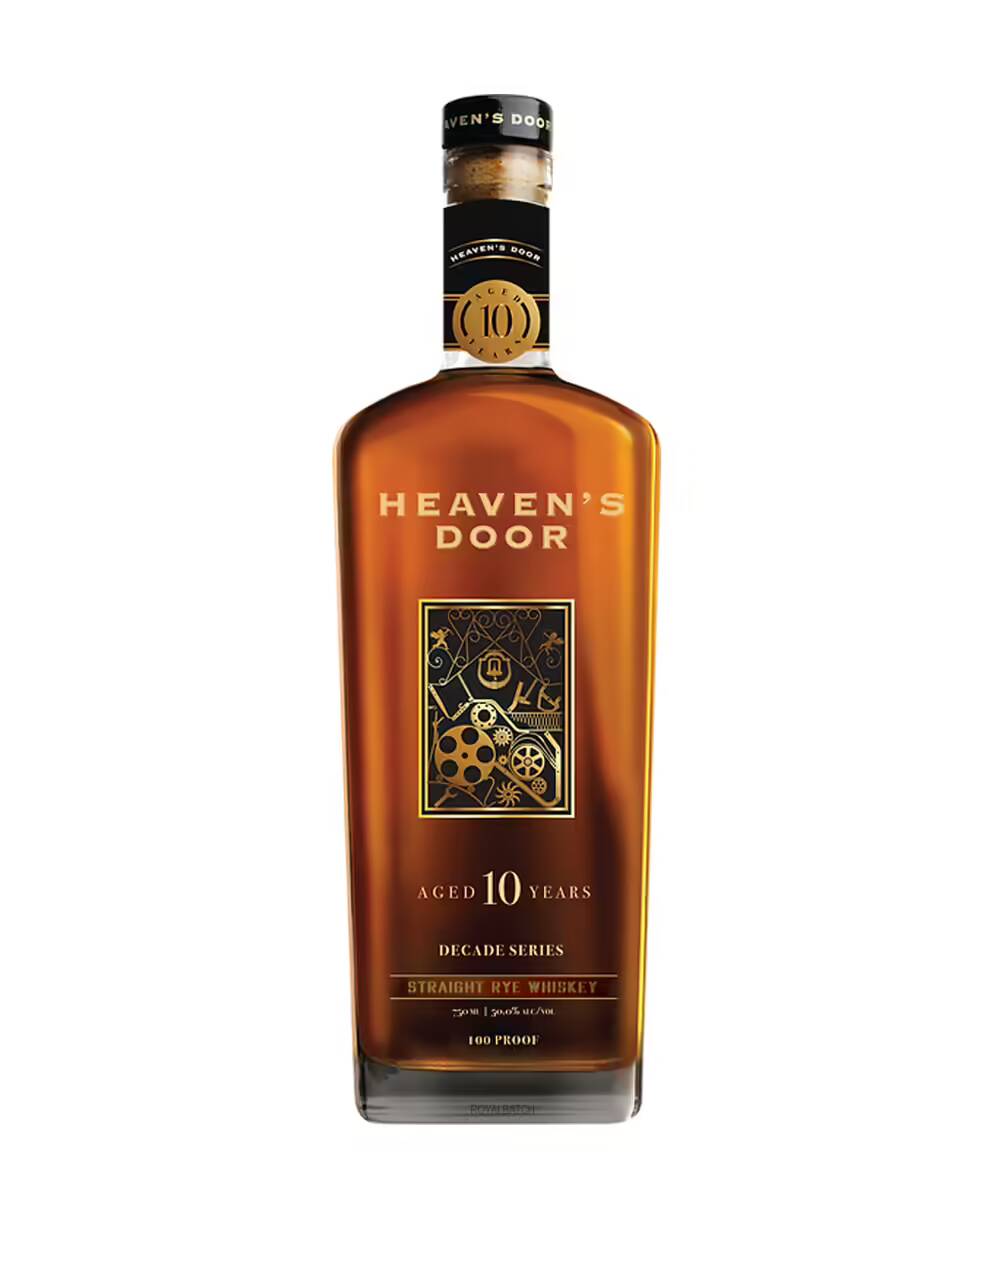 Heavens Door Decade Series Release 2 Straight Rye Whiskey